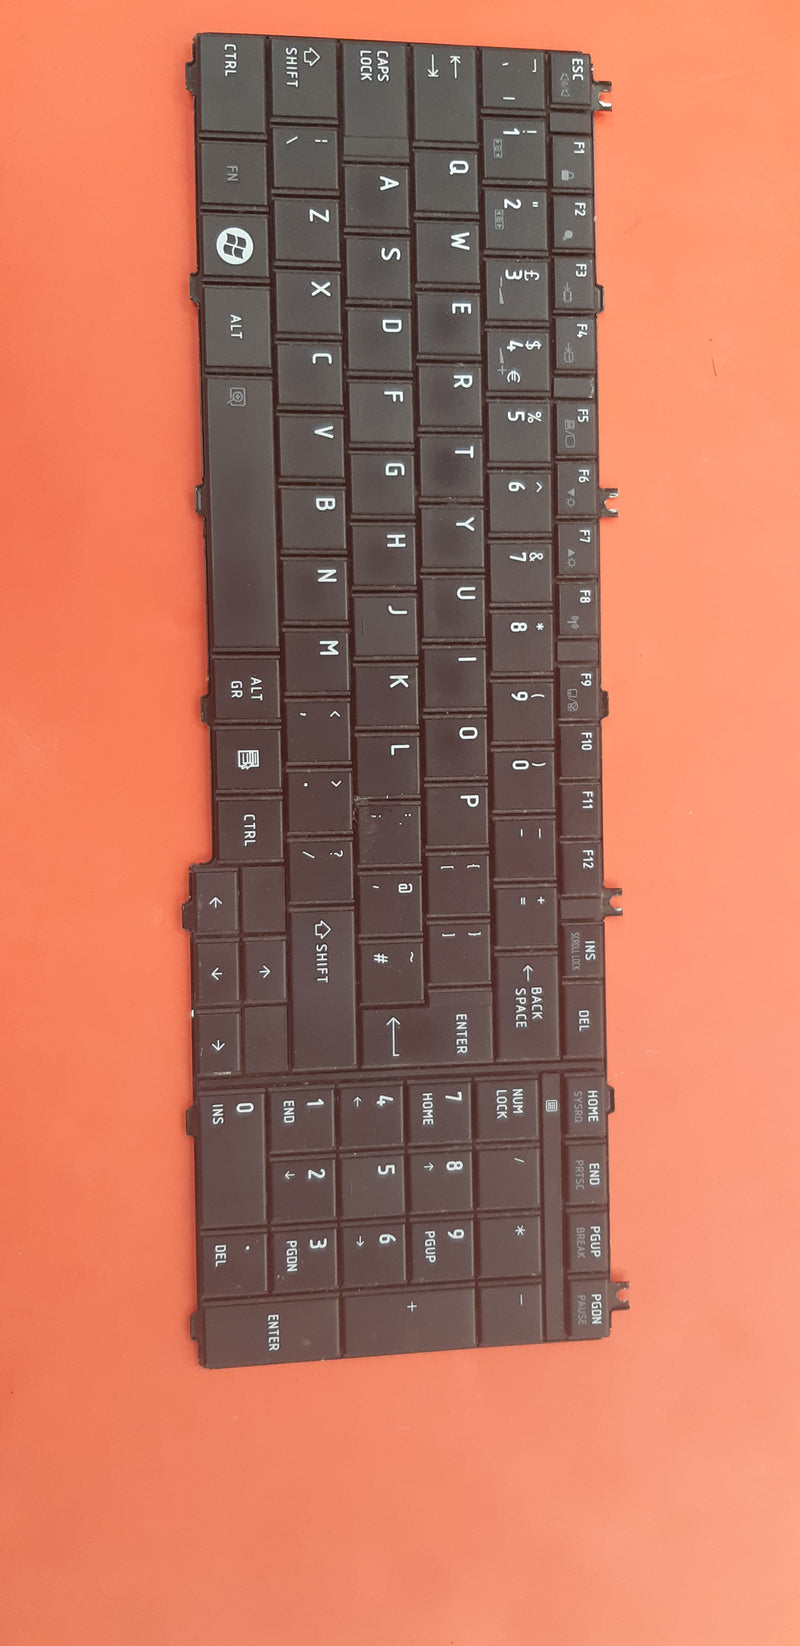 Laptop Keyboard for NSK-TN0SC 0U PK130CK1A04 TOSHIBA PRO